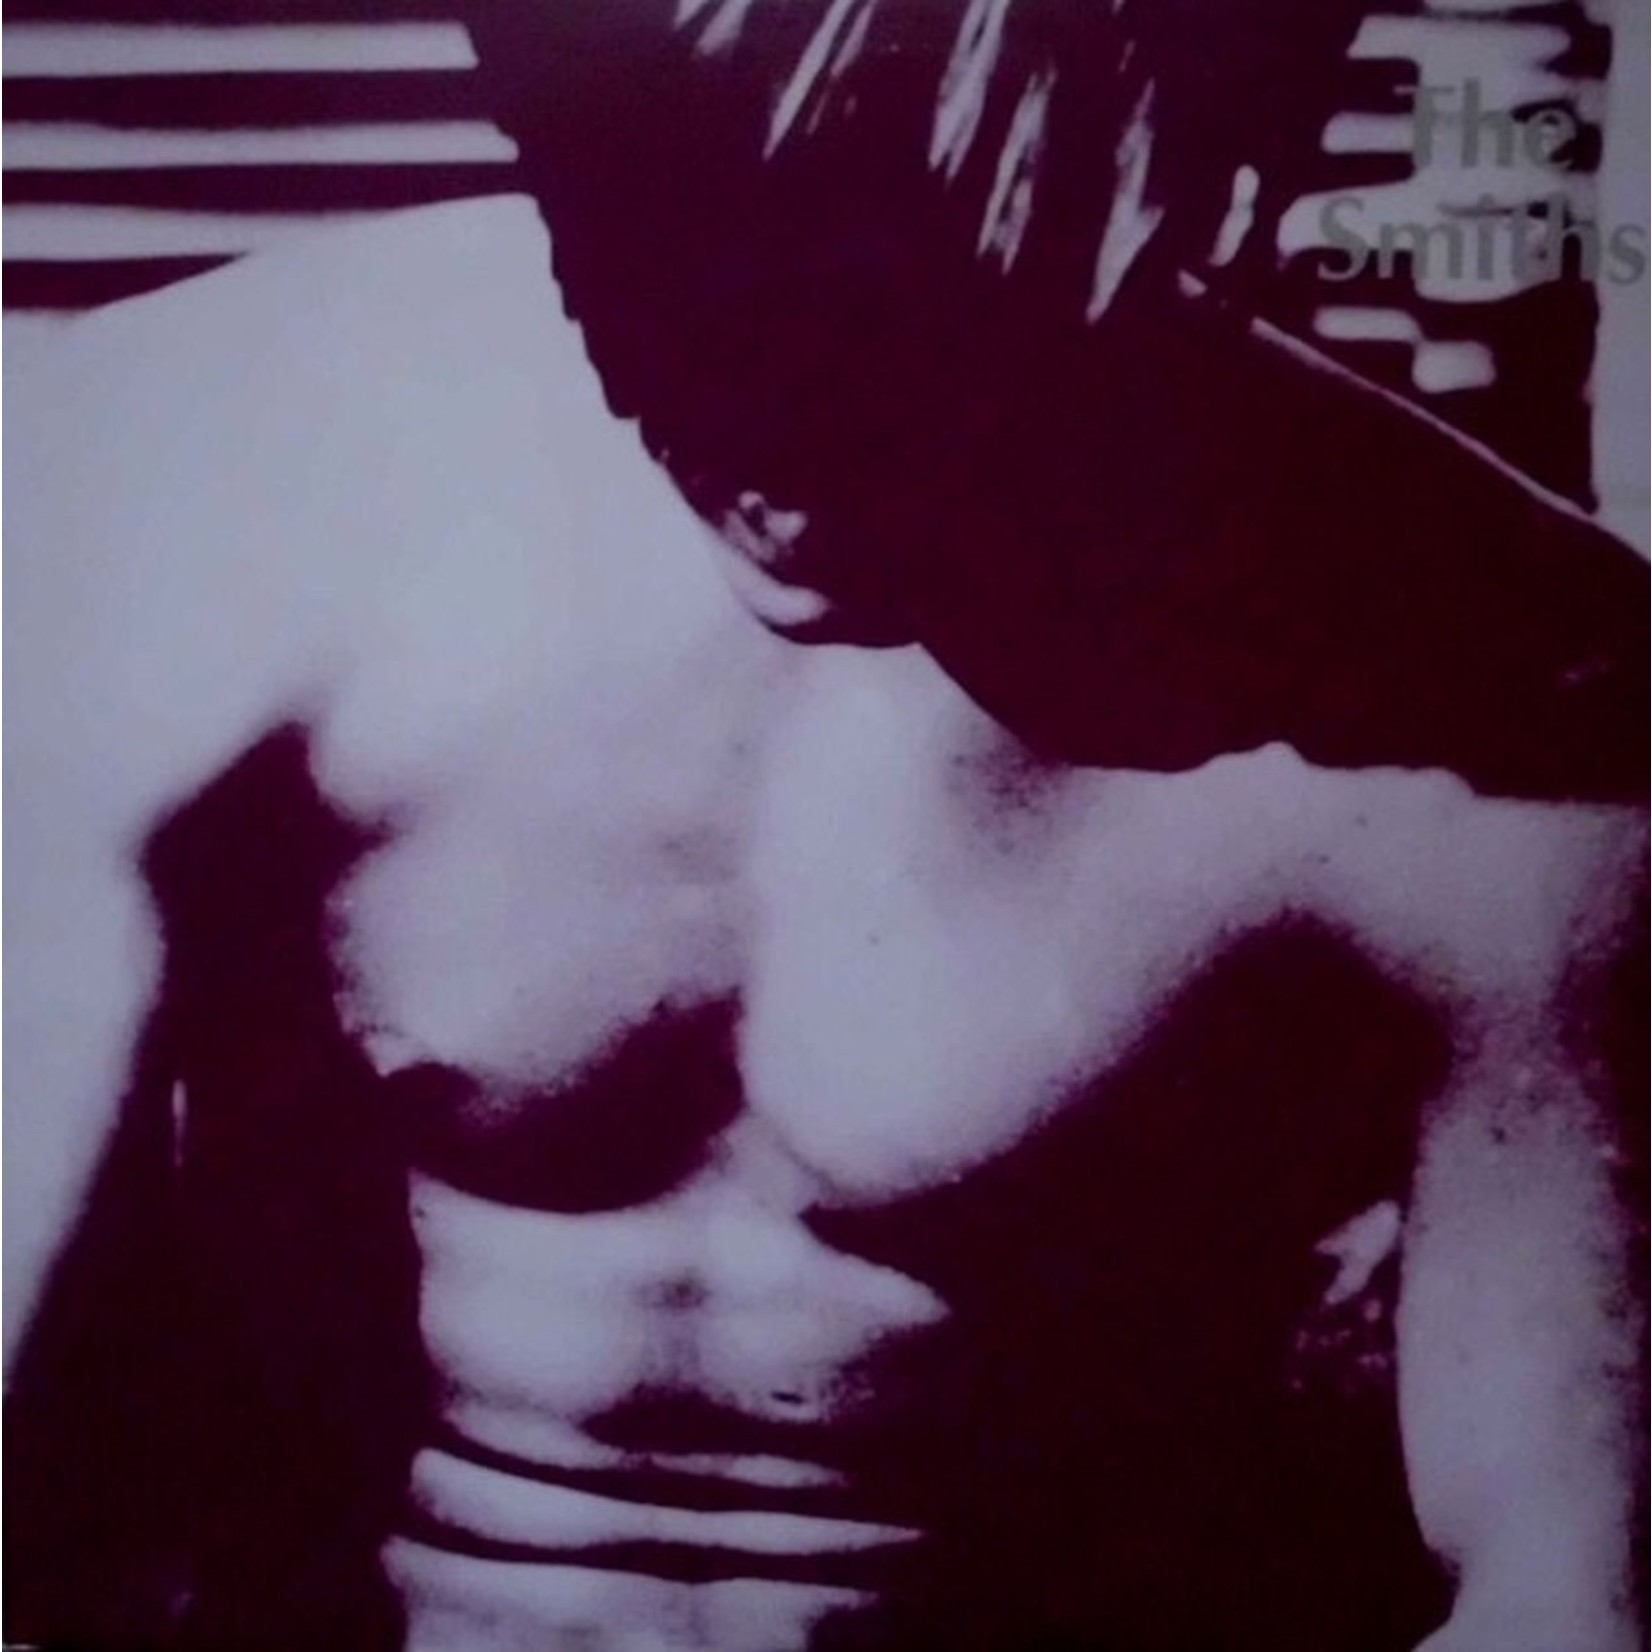 Vinyl The Smiths - S/T (UK Import)